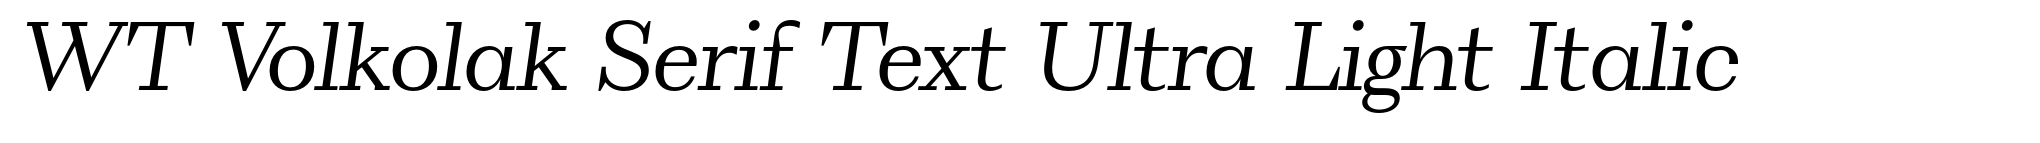 WT Volkolak Serif Text Ultra Light Italic image